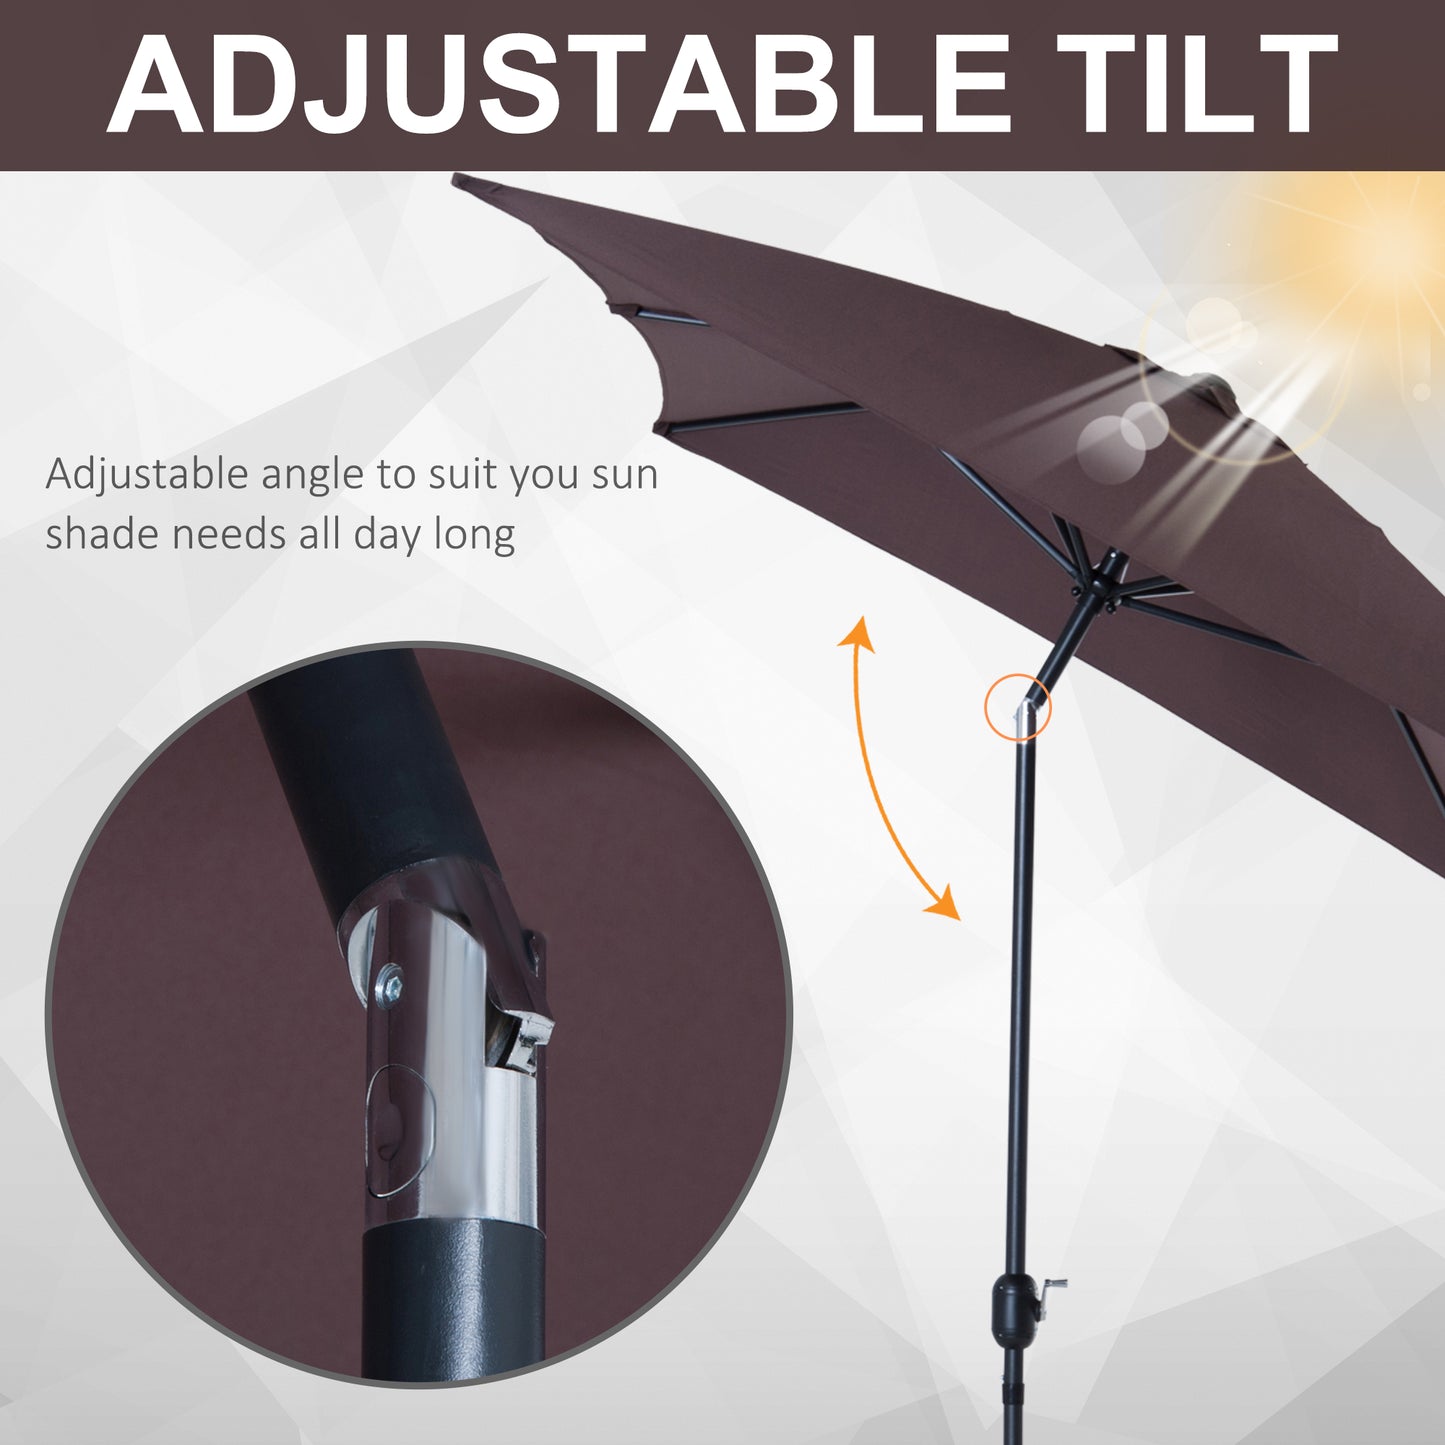 Outsunny Patio Umbrella Parasol W/ Tilt Crank-Brown